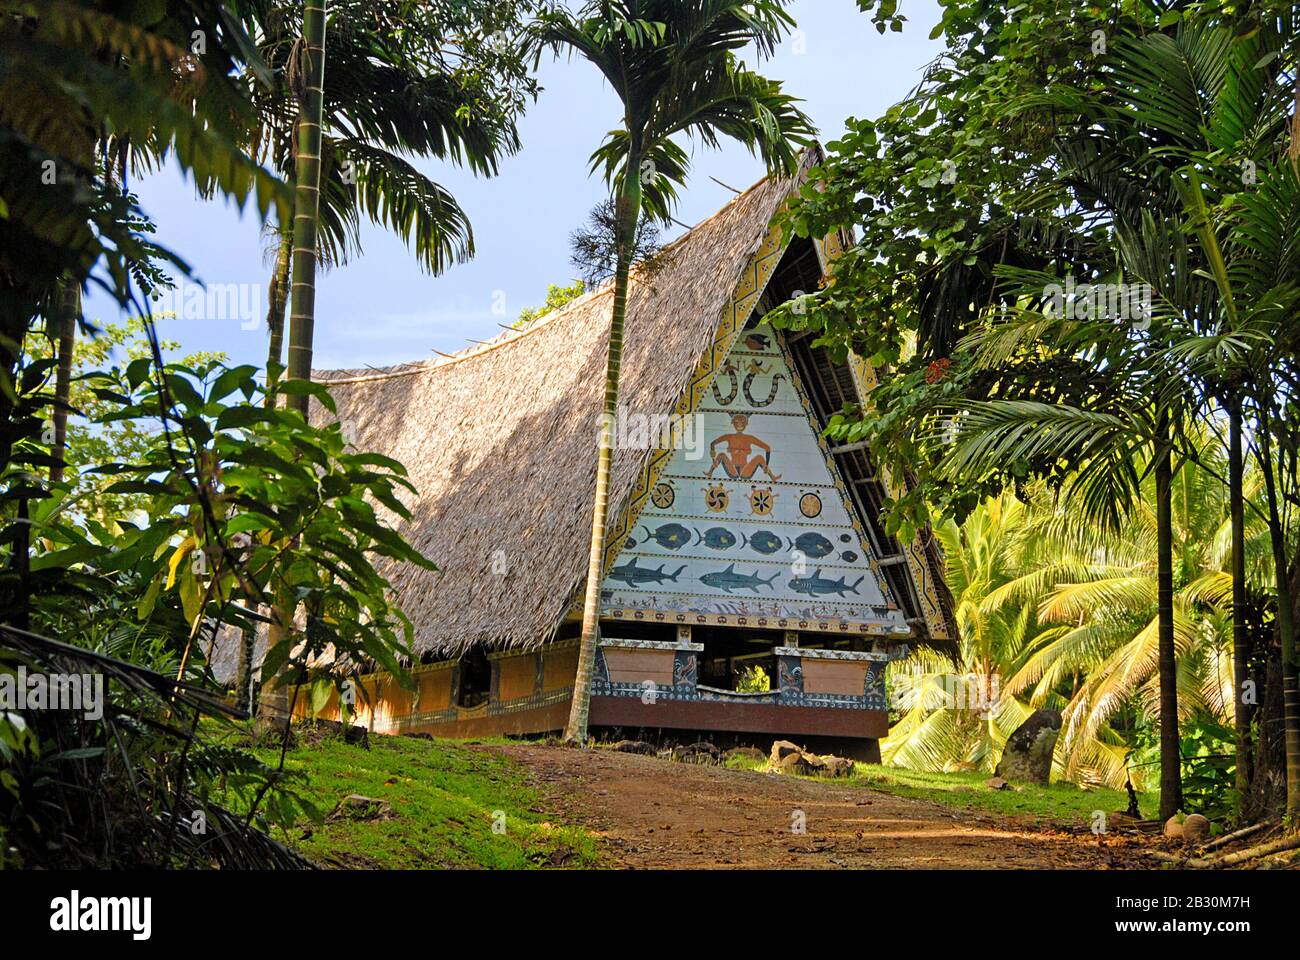 Una casa tradizionale maschile a Palau, Micronesia Foto Stock